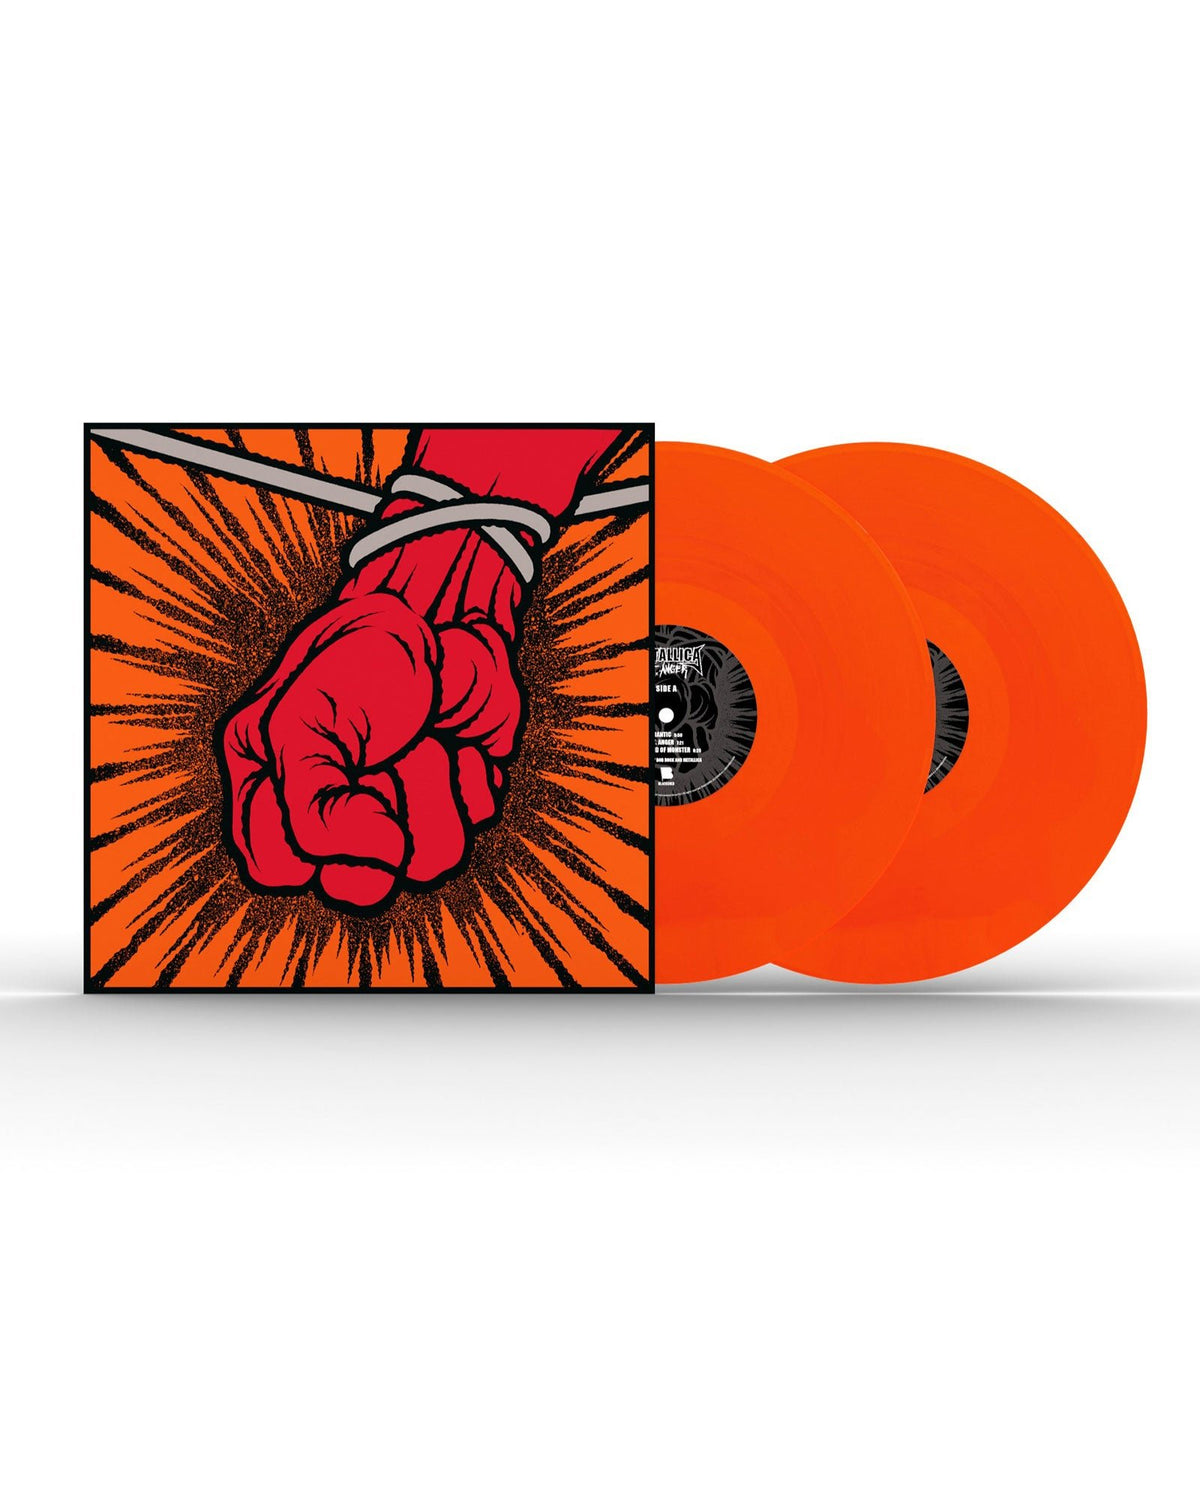 Metallica - 2LP Vinilo Naranja "St. Anger" Ed. limitada - D2fy · Rocktud - Rocktud